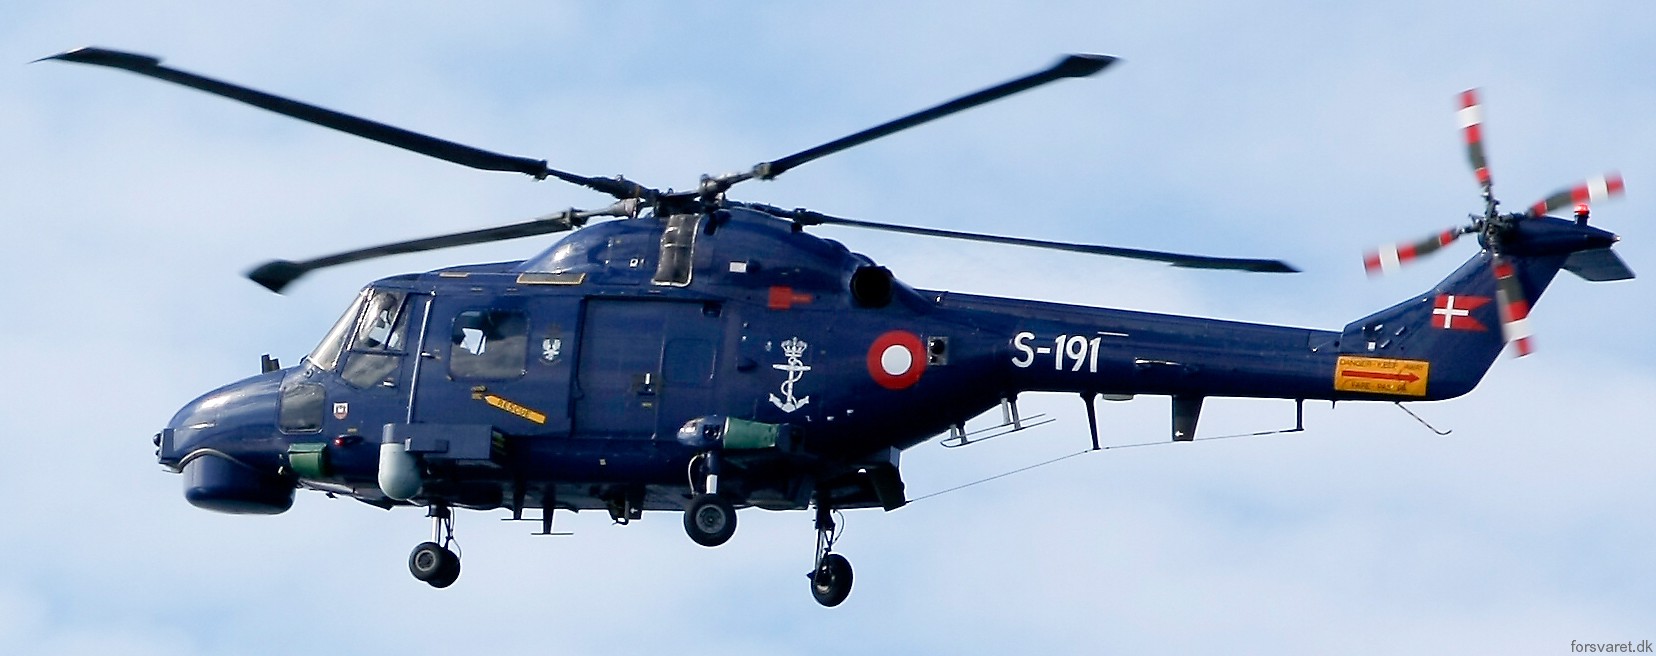 lynx mk.80 mk.90b helicopter westland royal danish navy air force kongelige danske marine flyvevabnet s-191 17